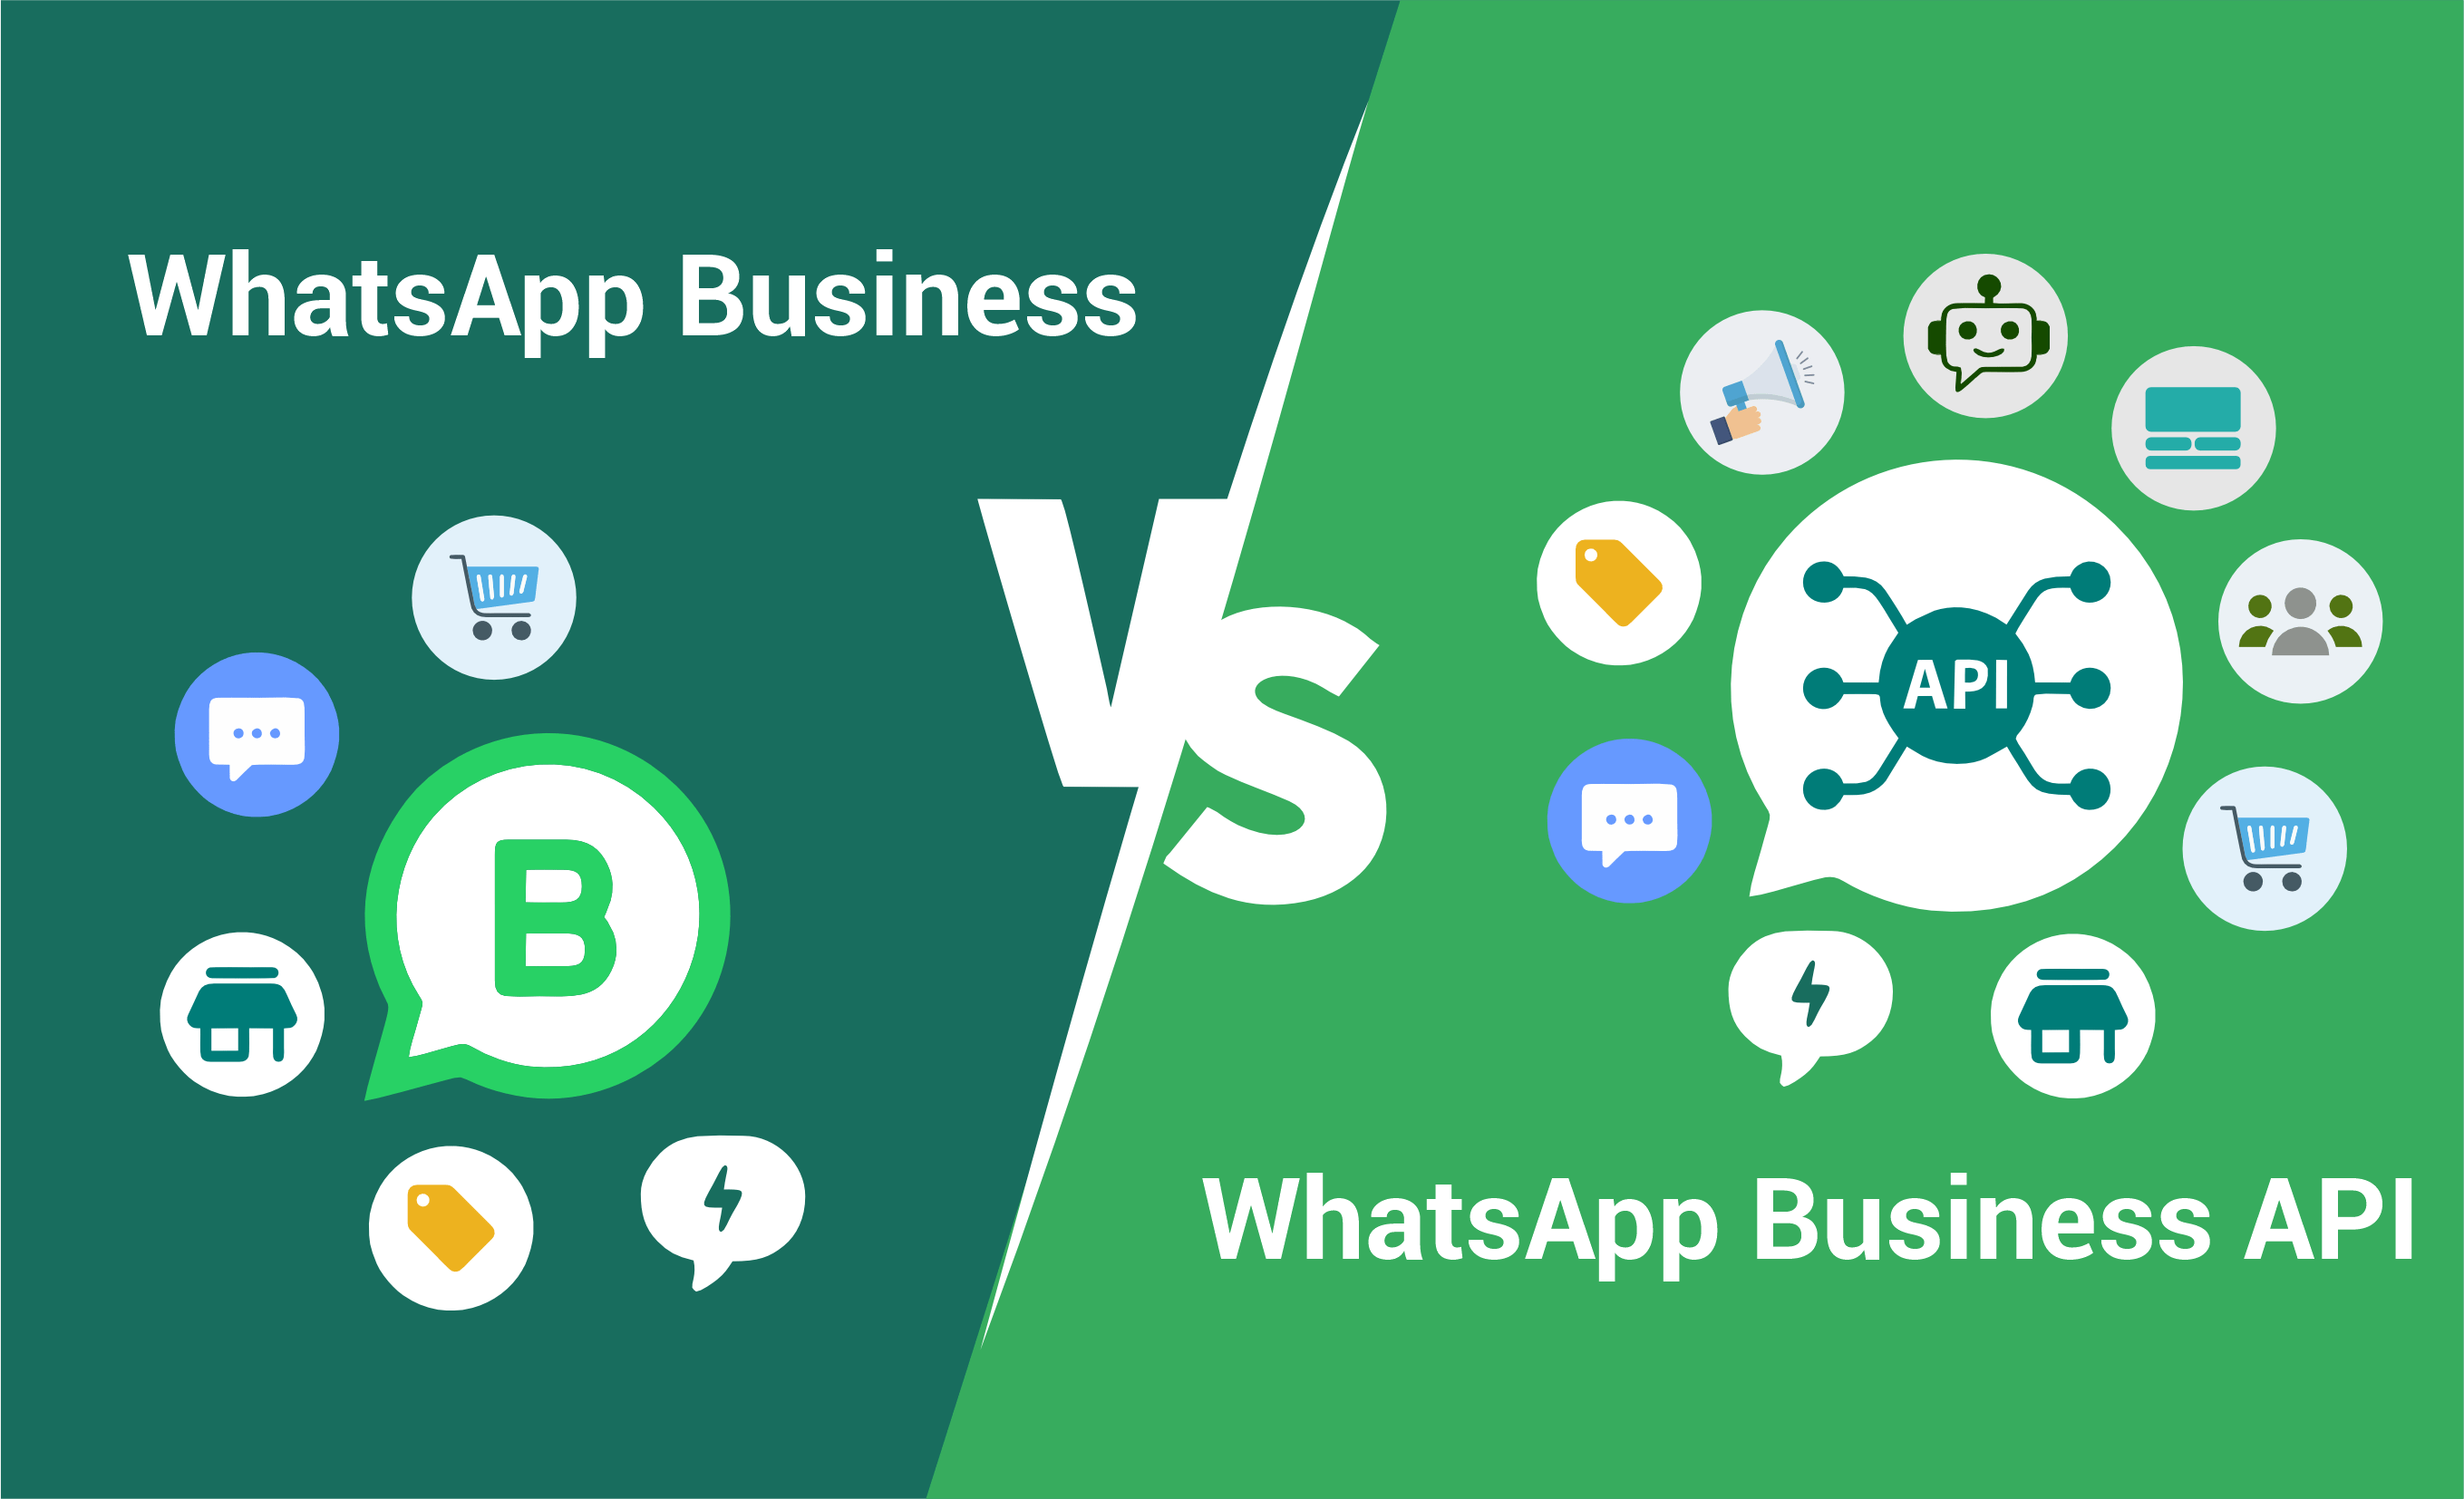 WhatsApp Business vs. WhatsApp Business API